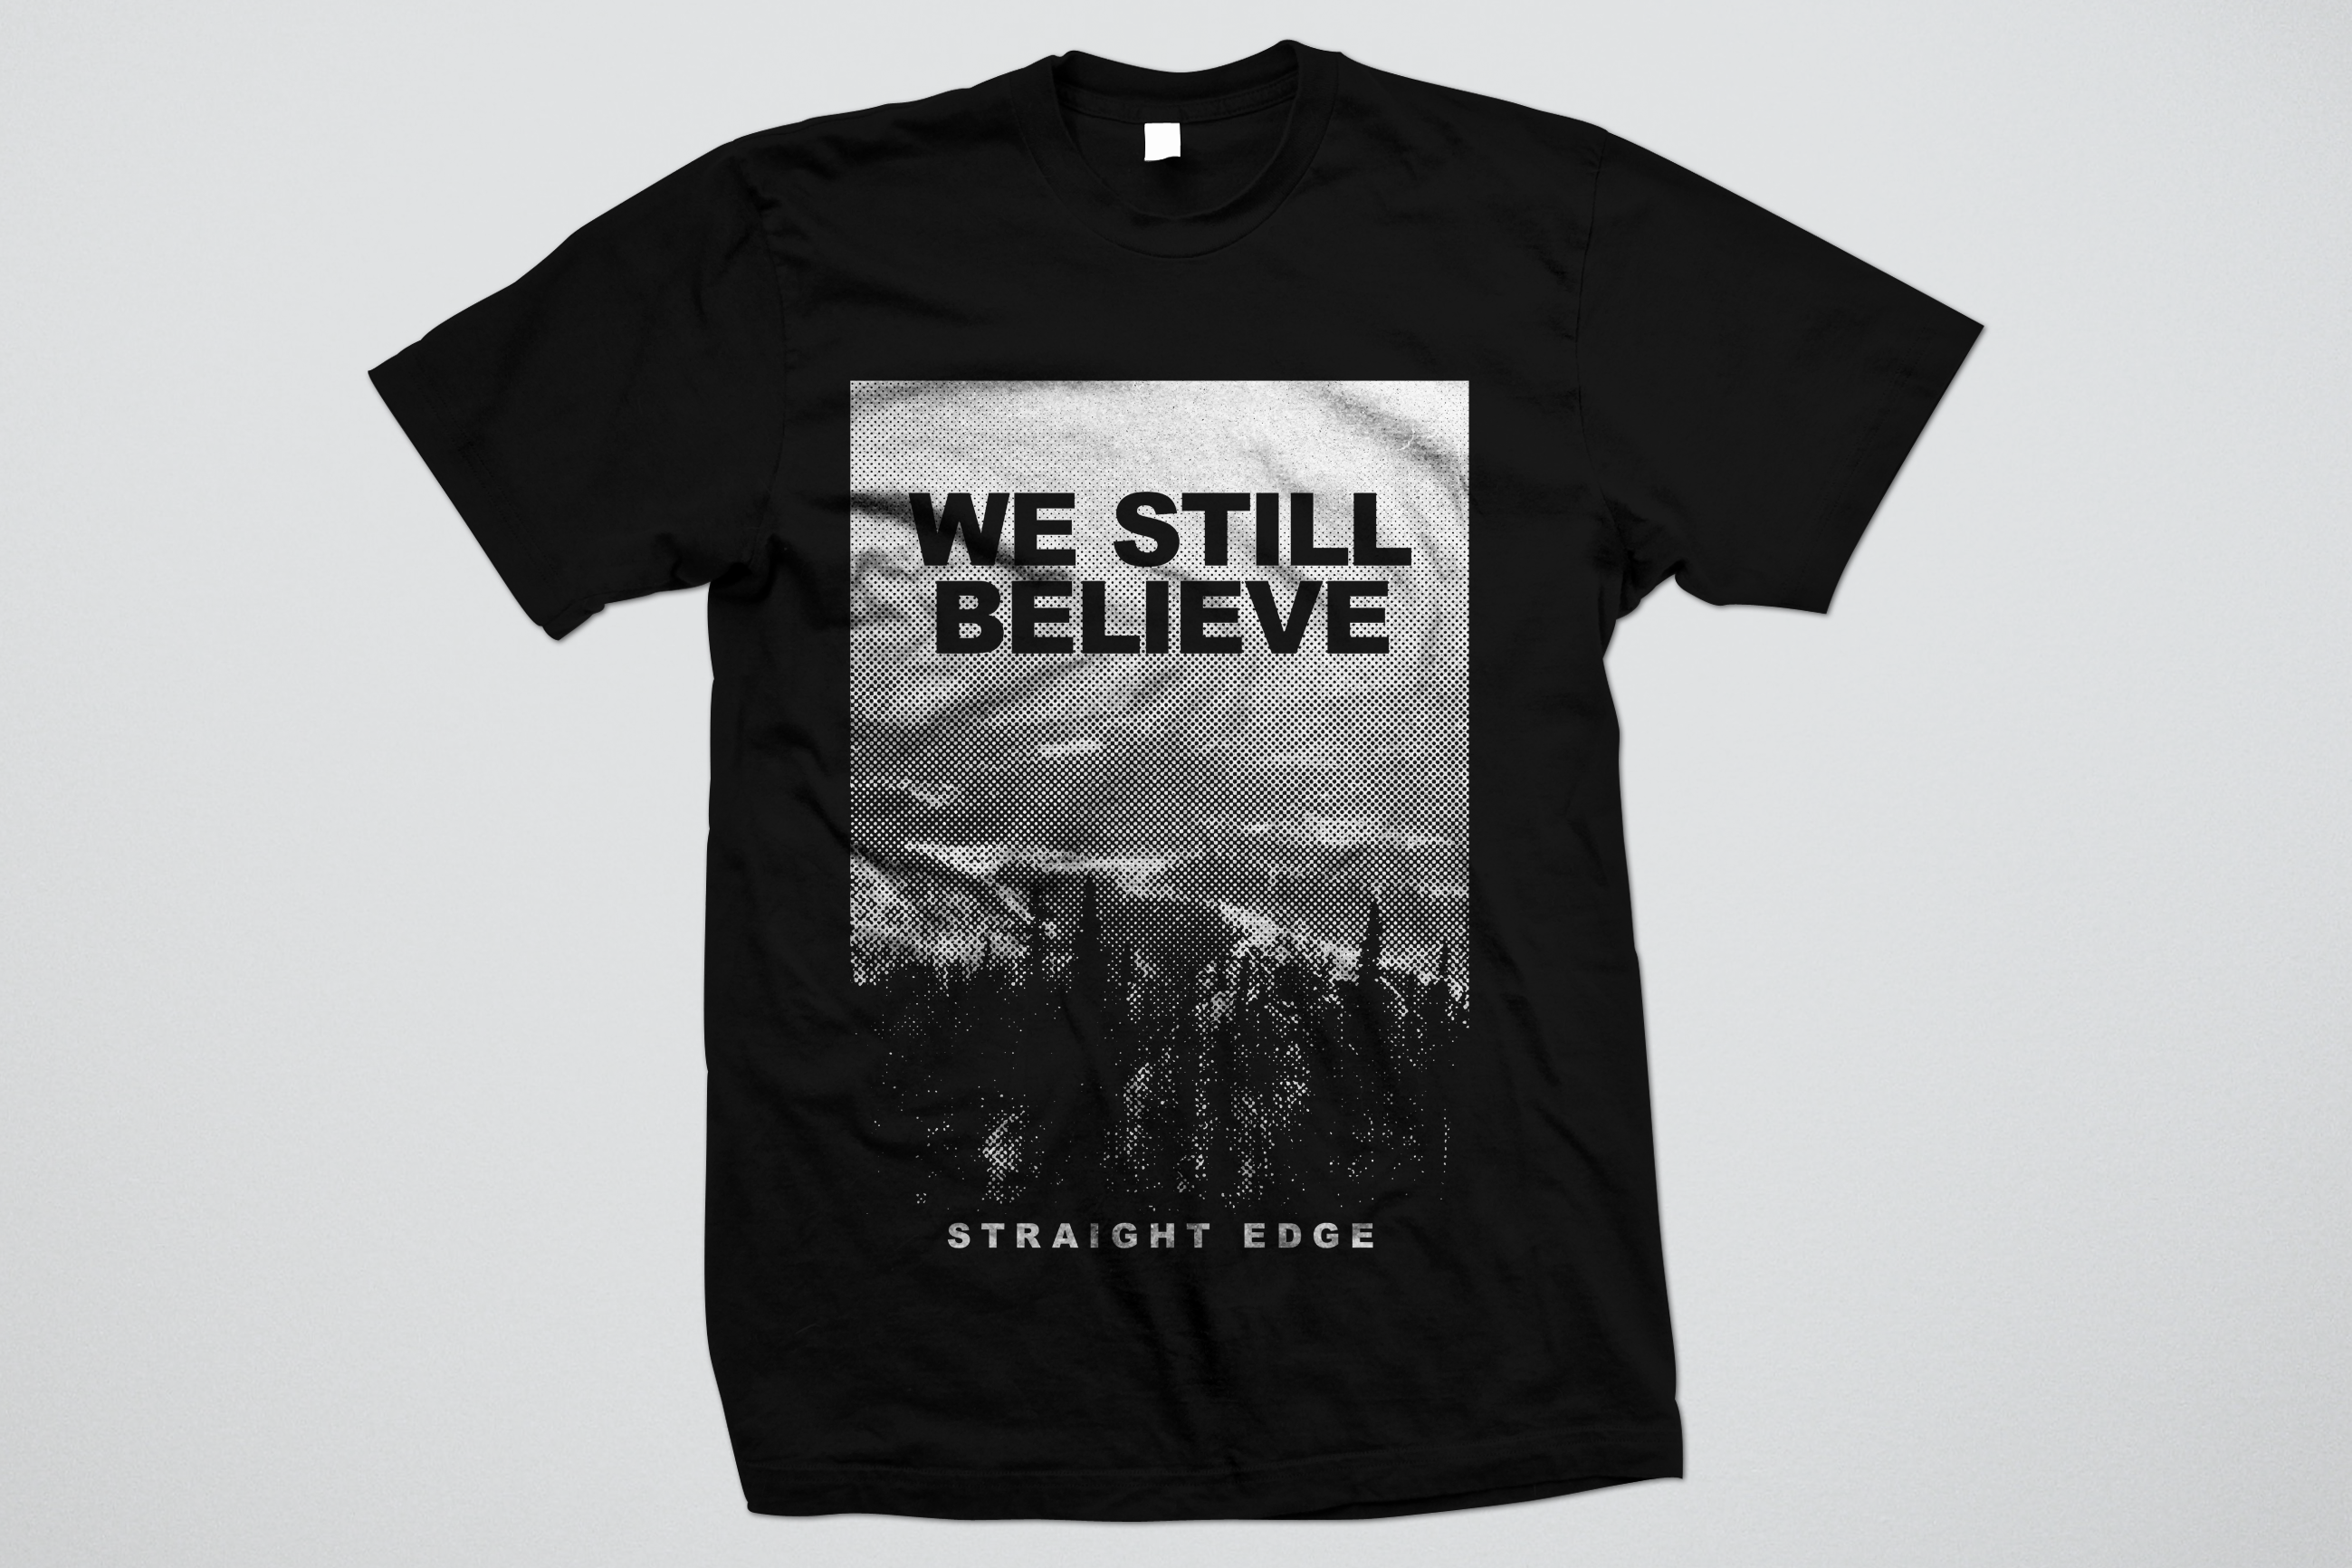 We Still Believe Straight Edge ladies tee shirt in black by STRAIGHTEDGEWORLDWIDE